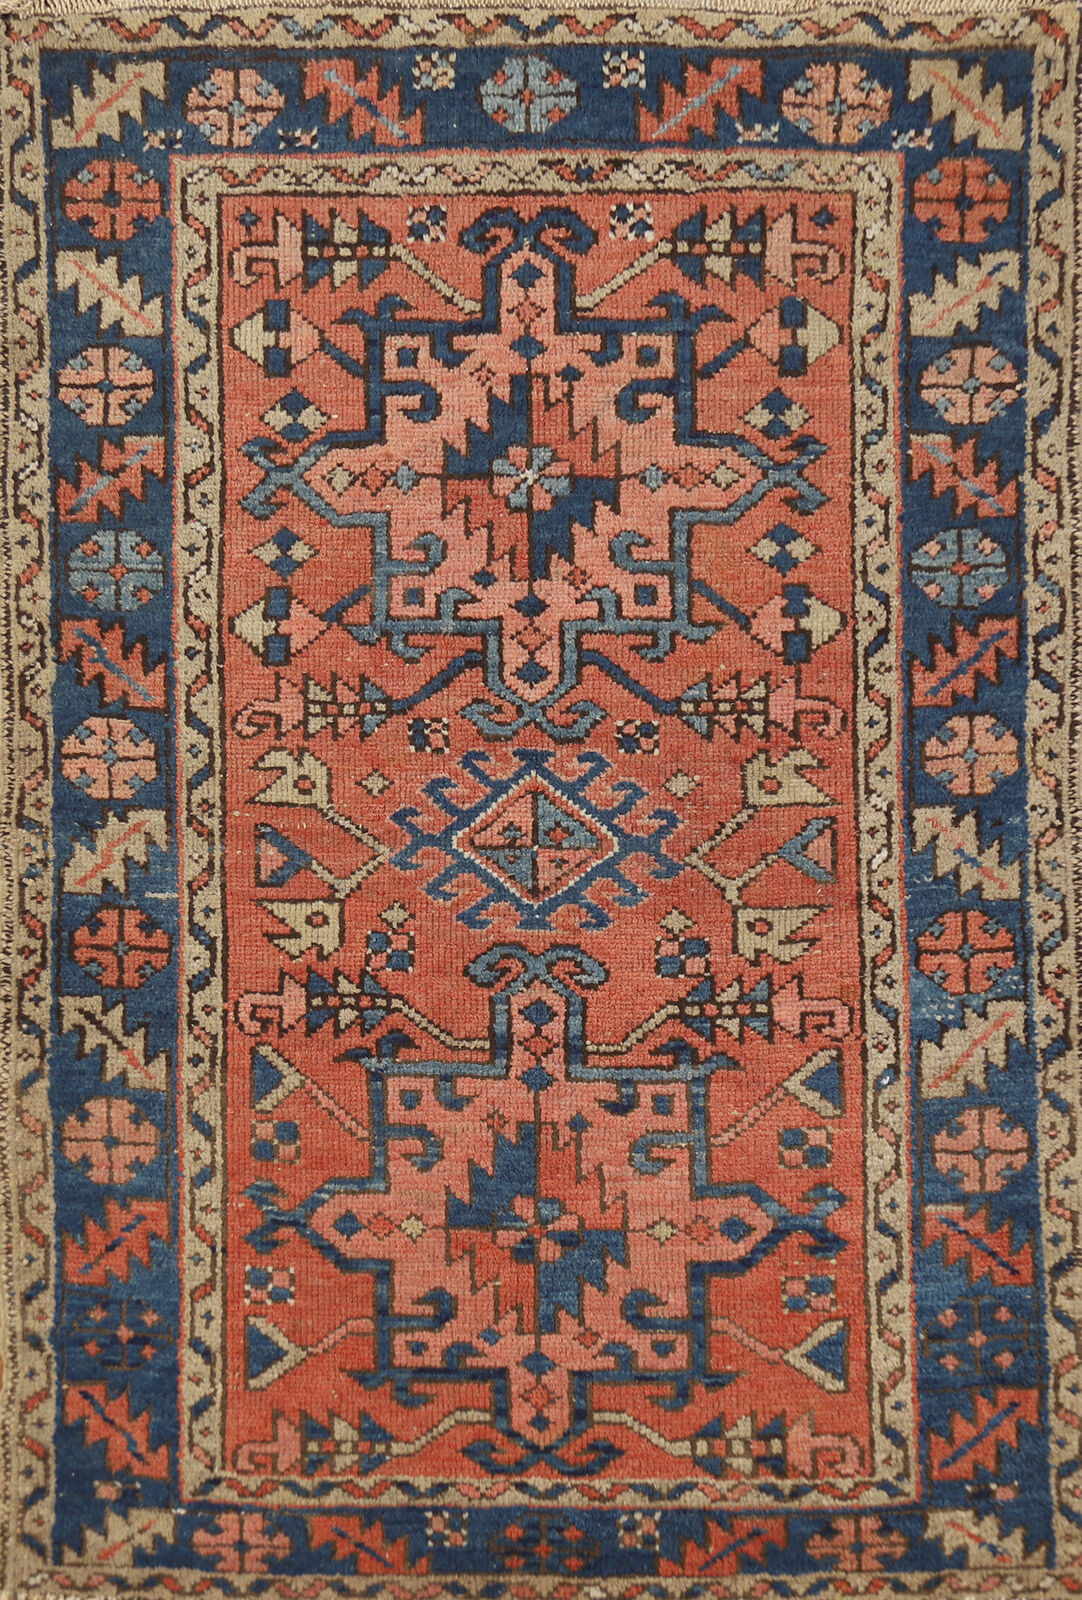 Antique Vegetable Dye Heriiz Serapi Geometric Traditional Hand-made Wool Rug 3x4